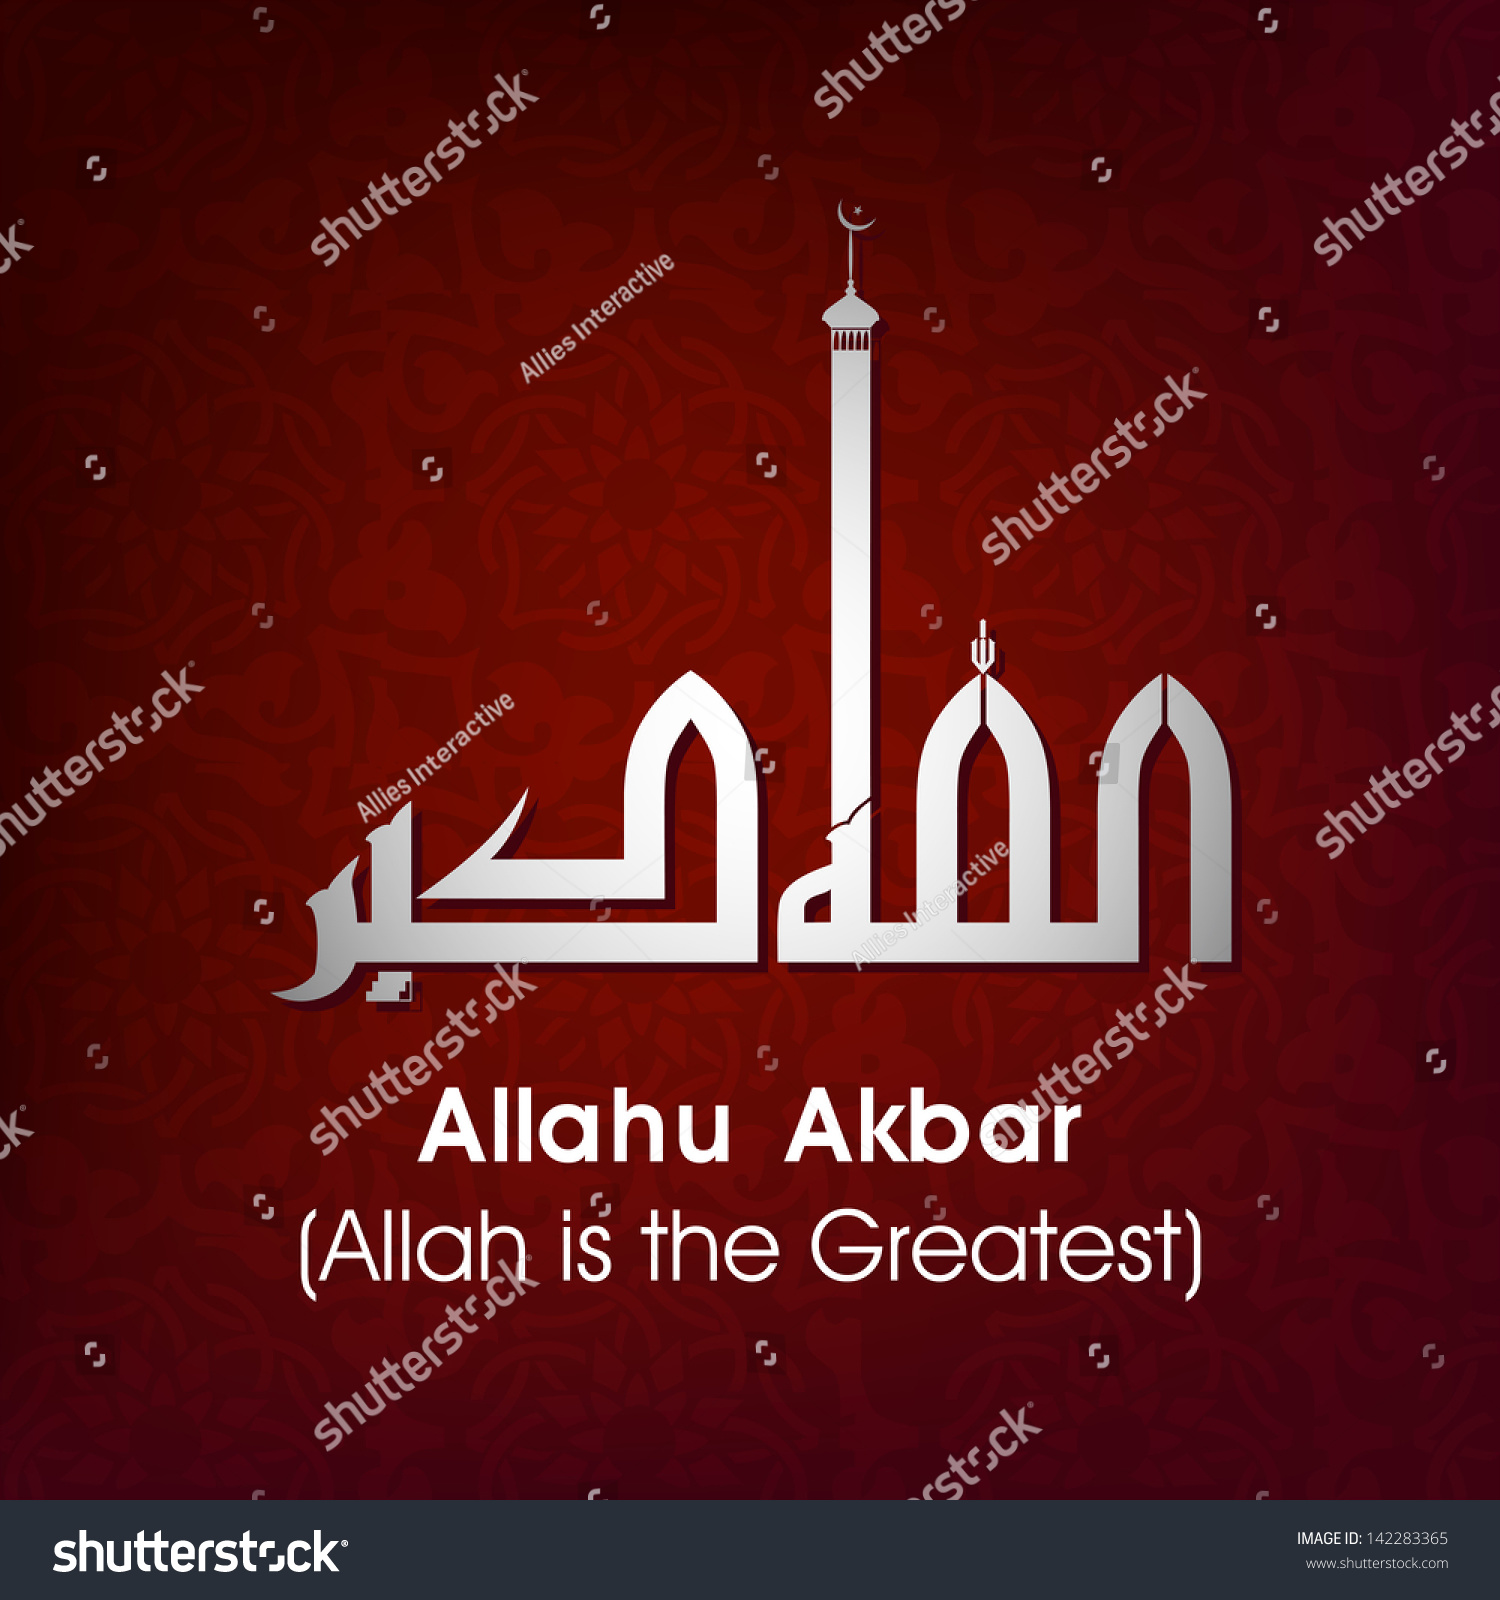 Allahu Akbar Prayer Song Mp3 Downloads Heavyjm - allahu akbar roblox id loud